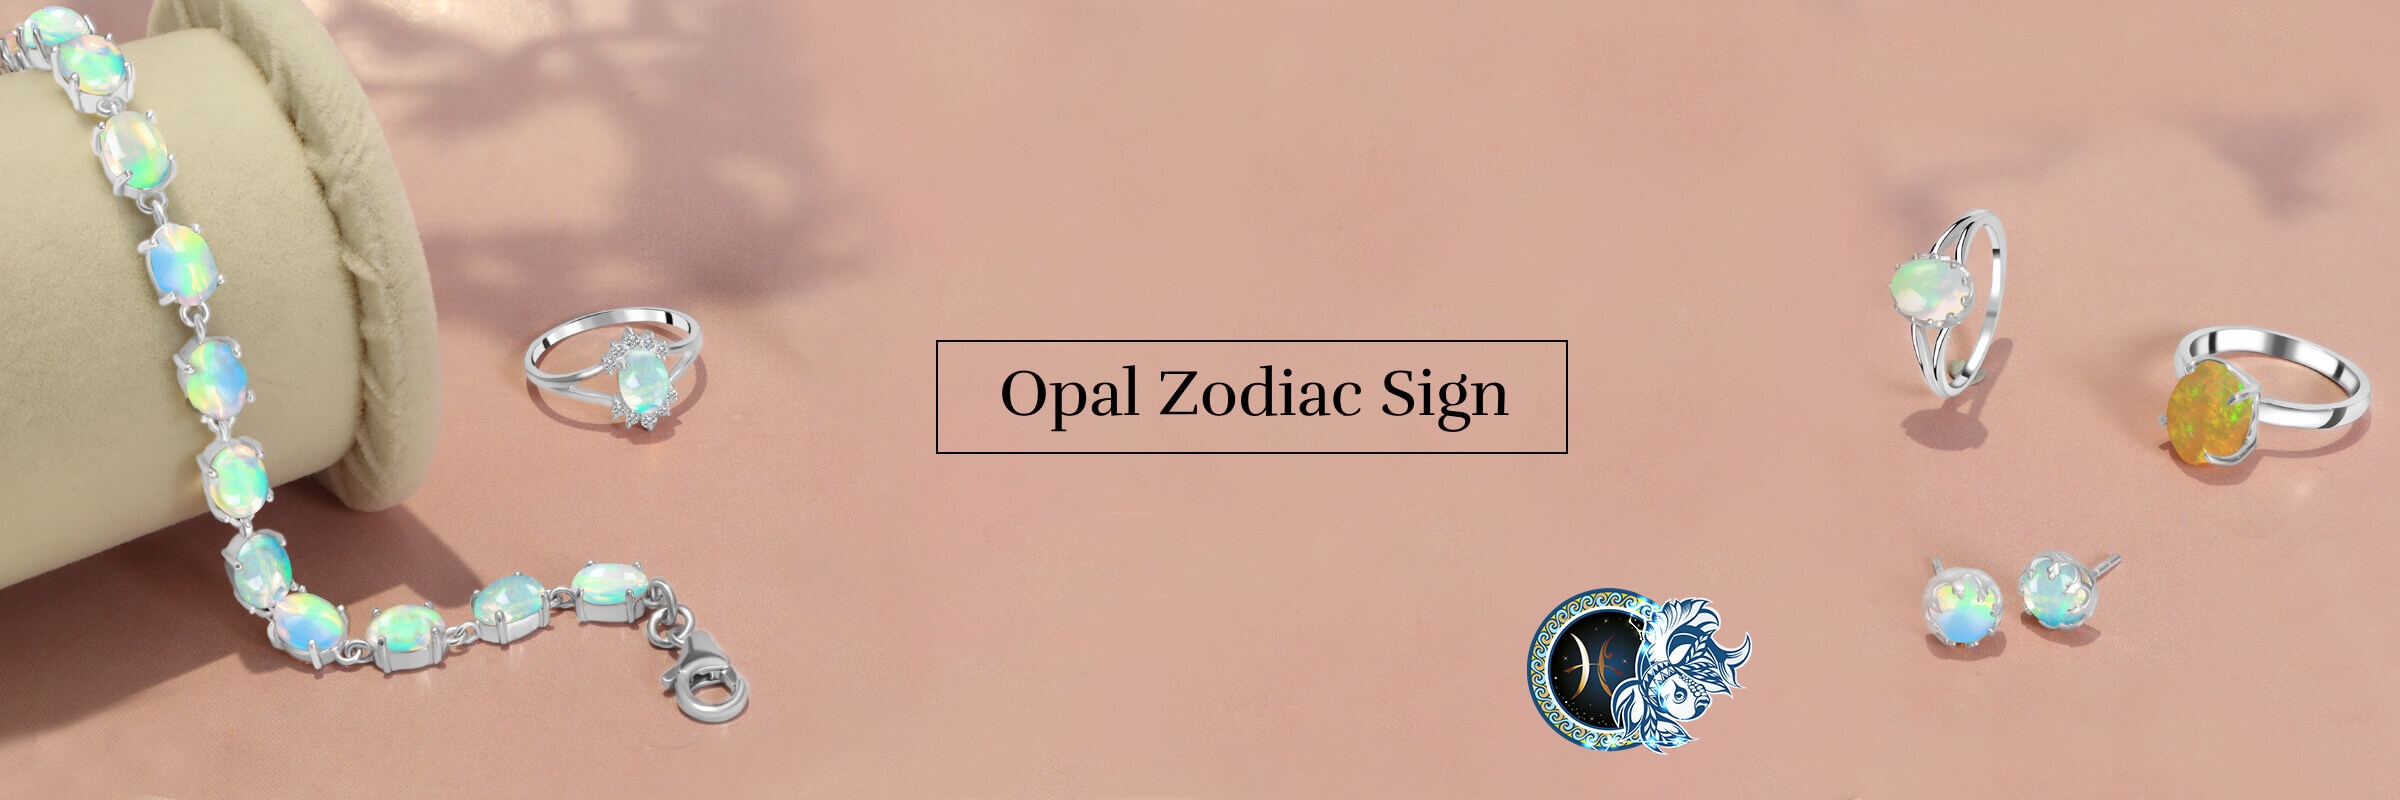 Zodiac sign associated to opal